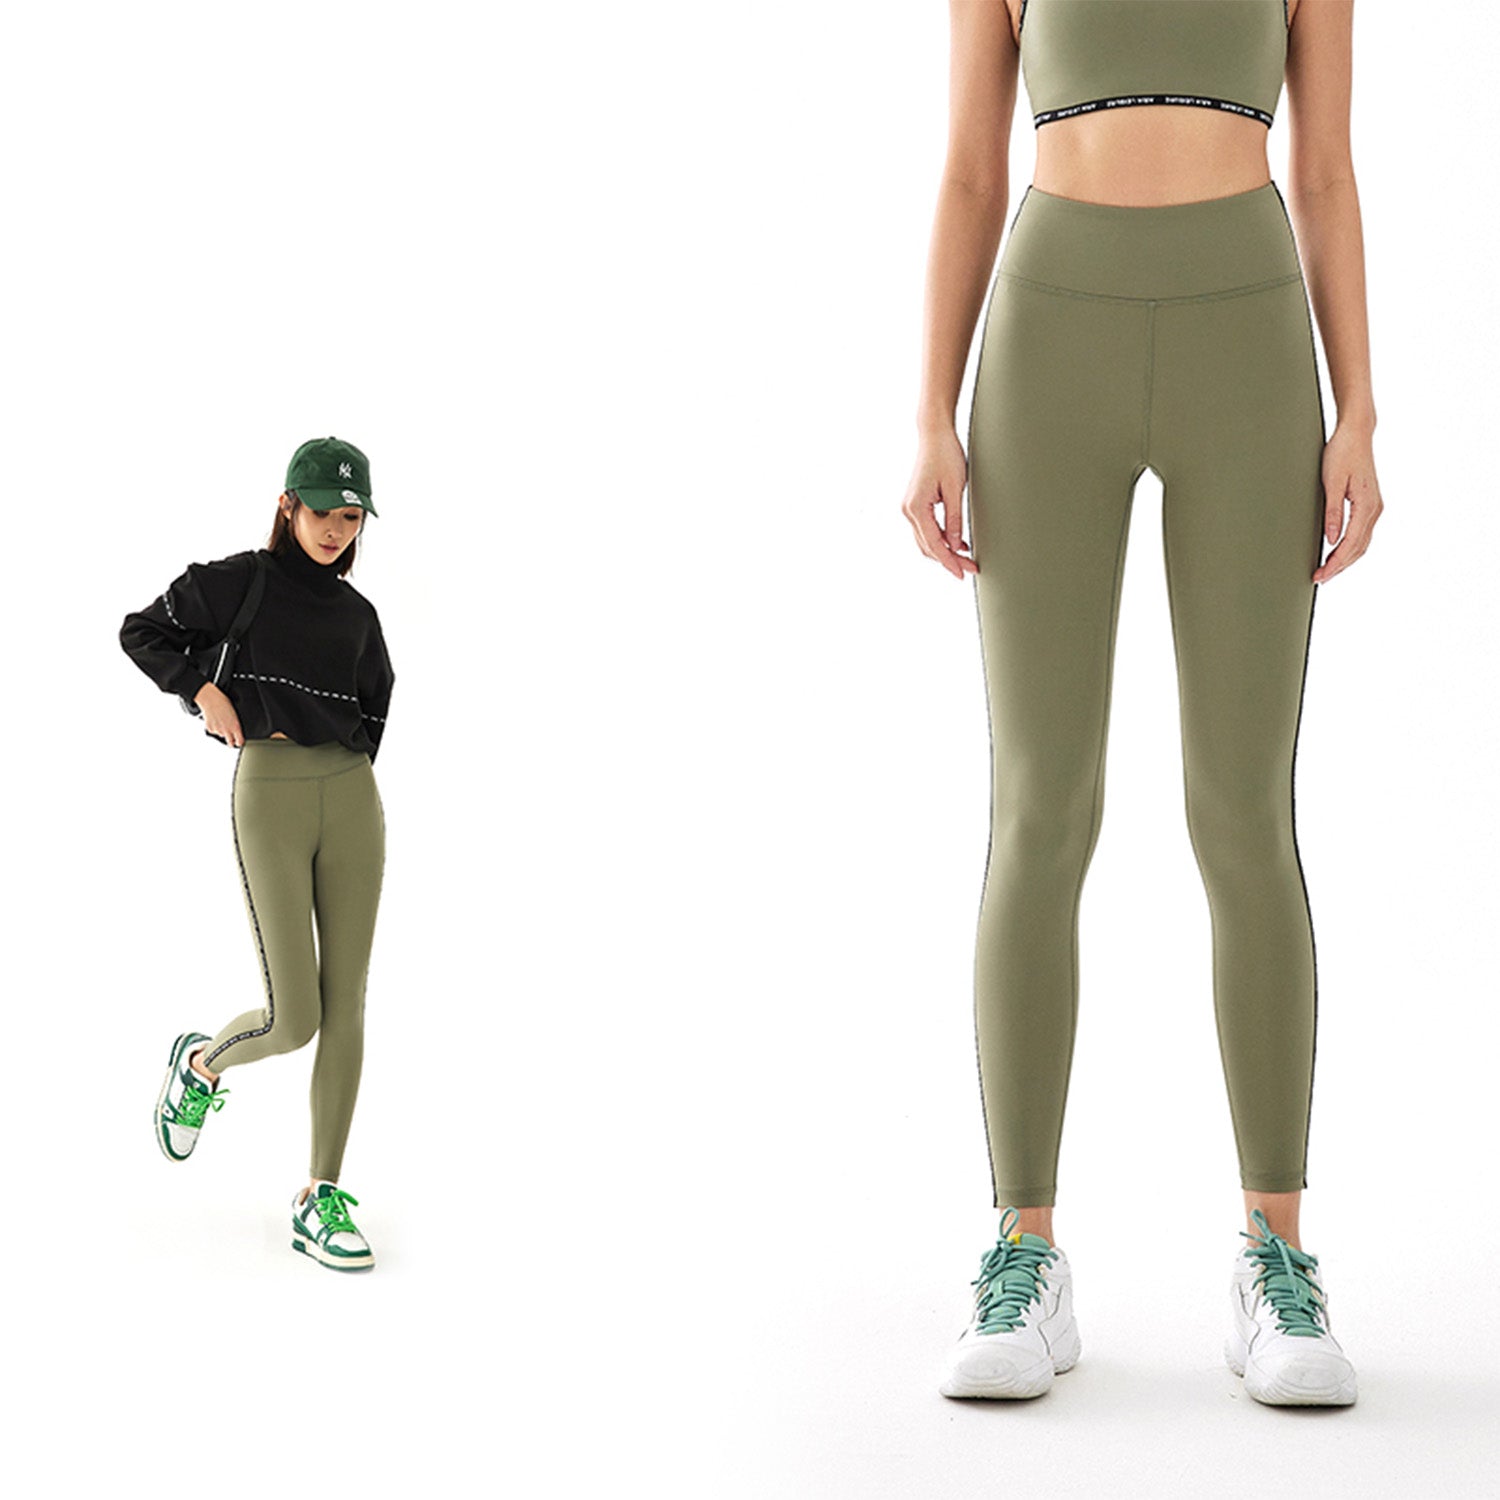 Buy Women's Tight Sports Training Yoga Pants by Body404